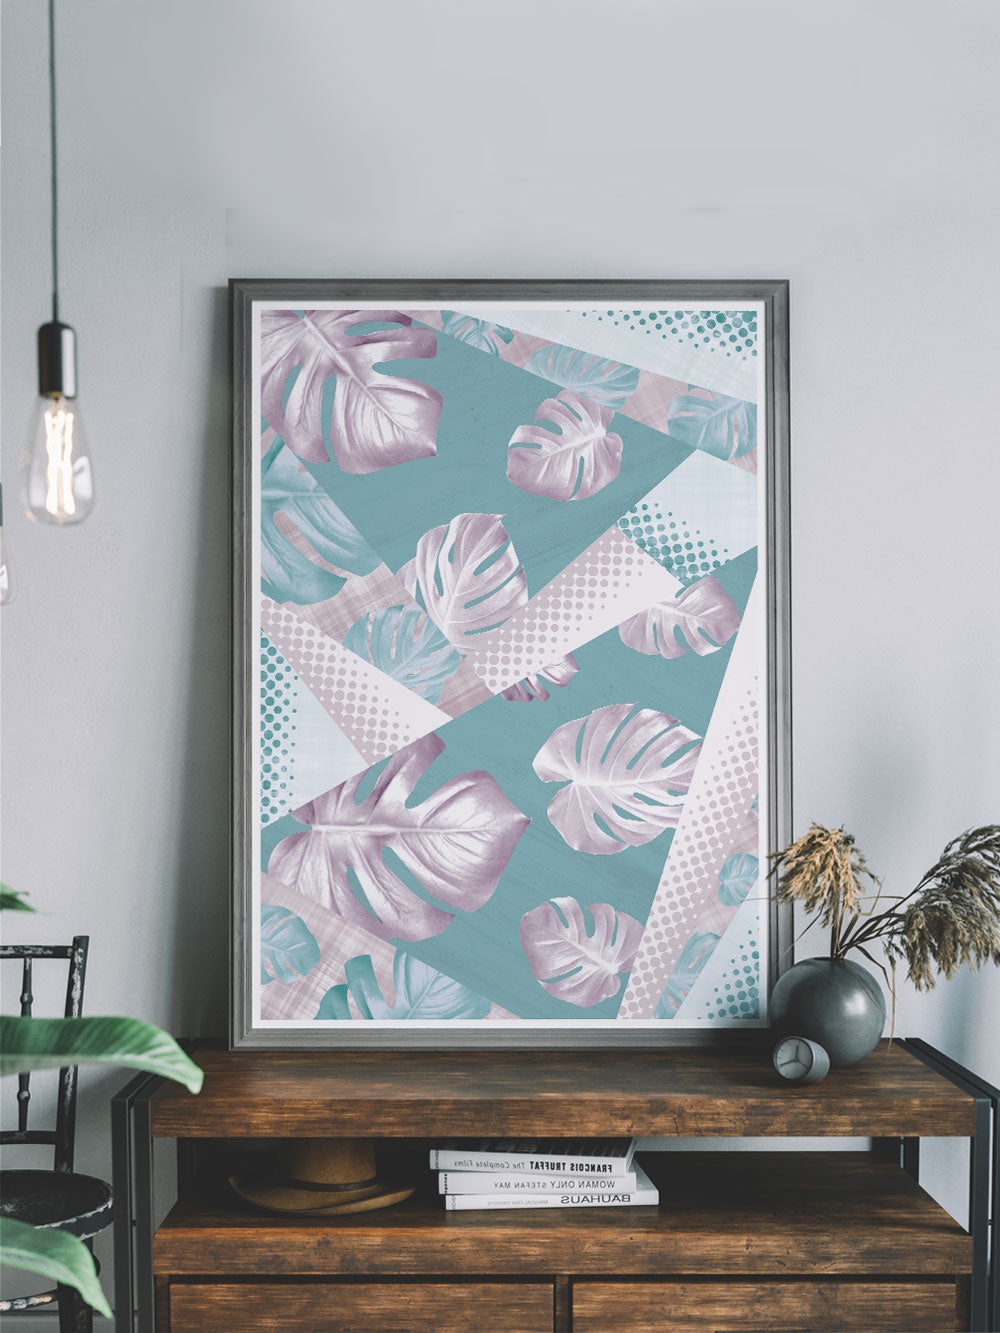 Stunning Whisper Botanical Print in a modern room